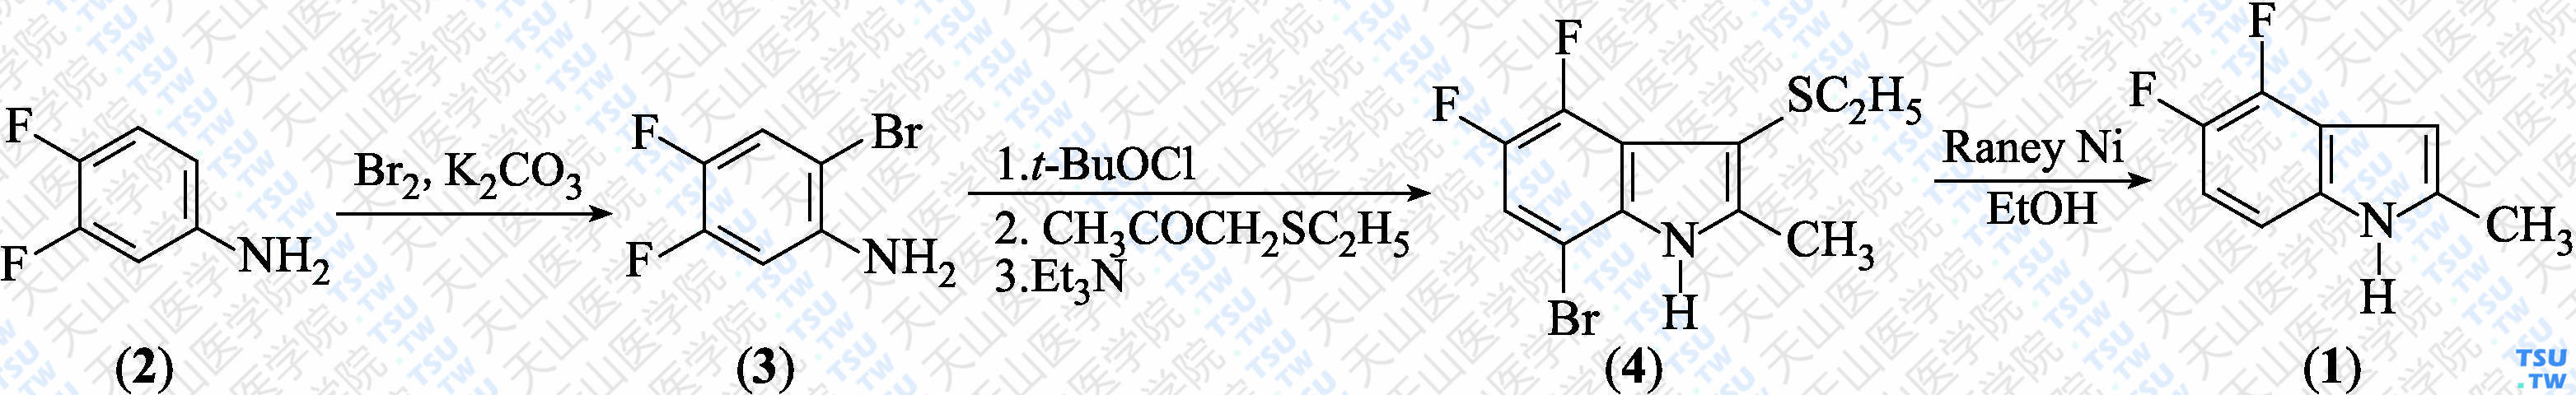 4，5-二氟-2-甲基吲哚（分子式：C<sub>9</sub>H<sub>7</sub>F<sub>2</sub>N）的合成方法路线及其结构式